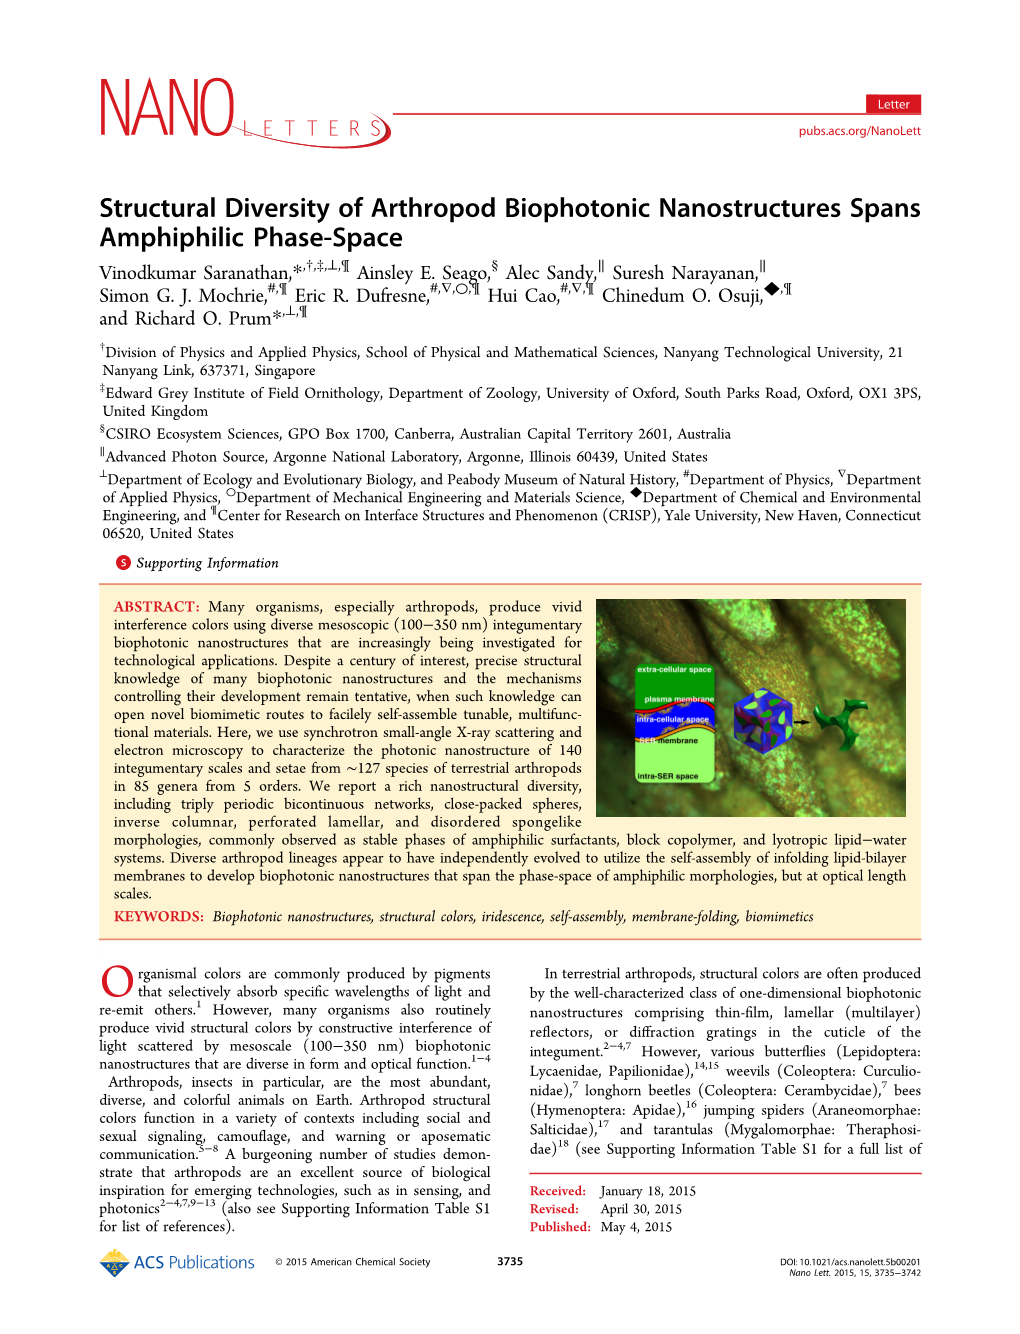 Structural Diversity of Arthropod Biophotonic Nanostructures Spans Amphiphilic Phase-Space † ‡ ⊥ ¶ § ∥ ∥ Vinodkumar Saranathan,*, , , , Ainsley E